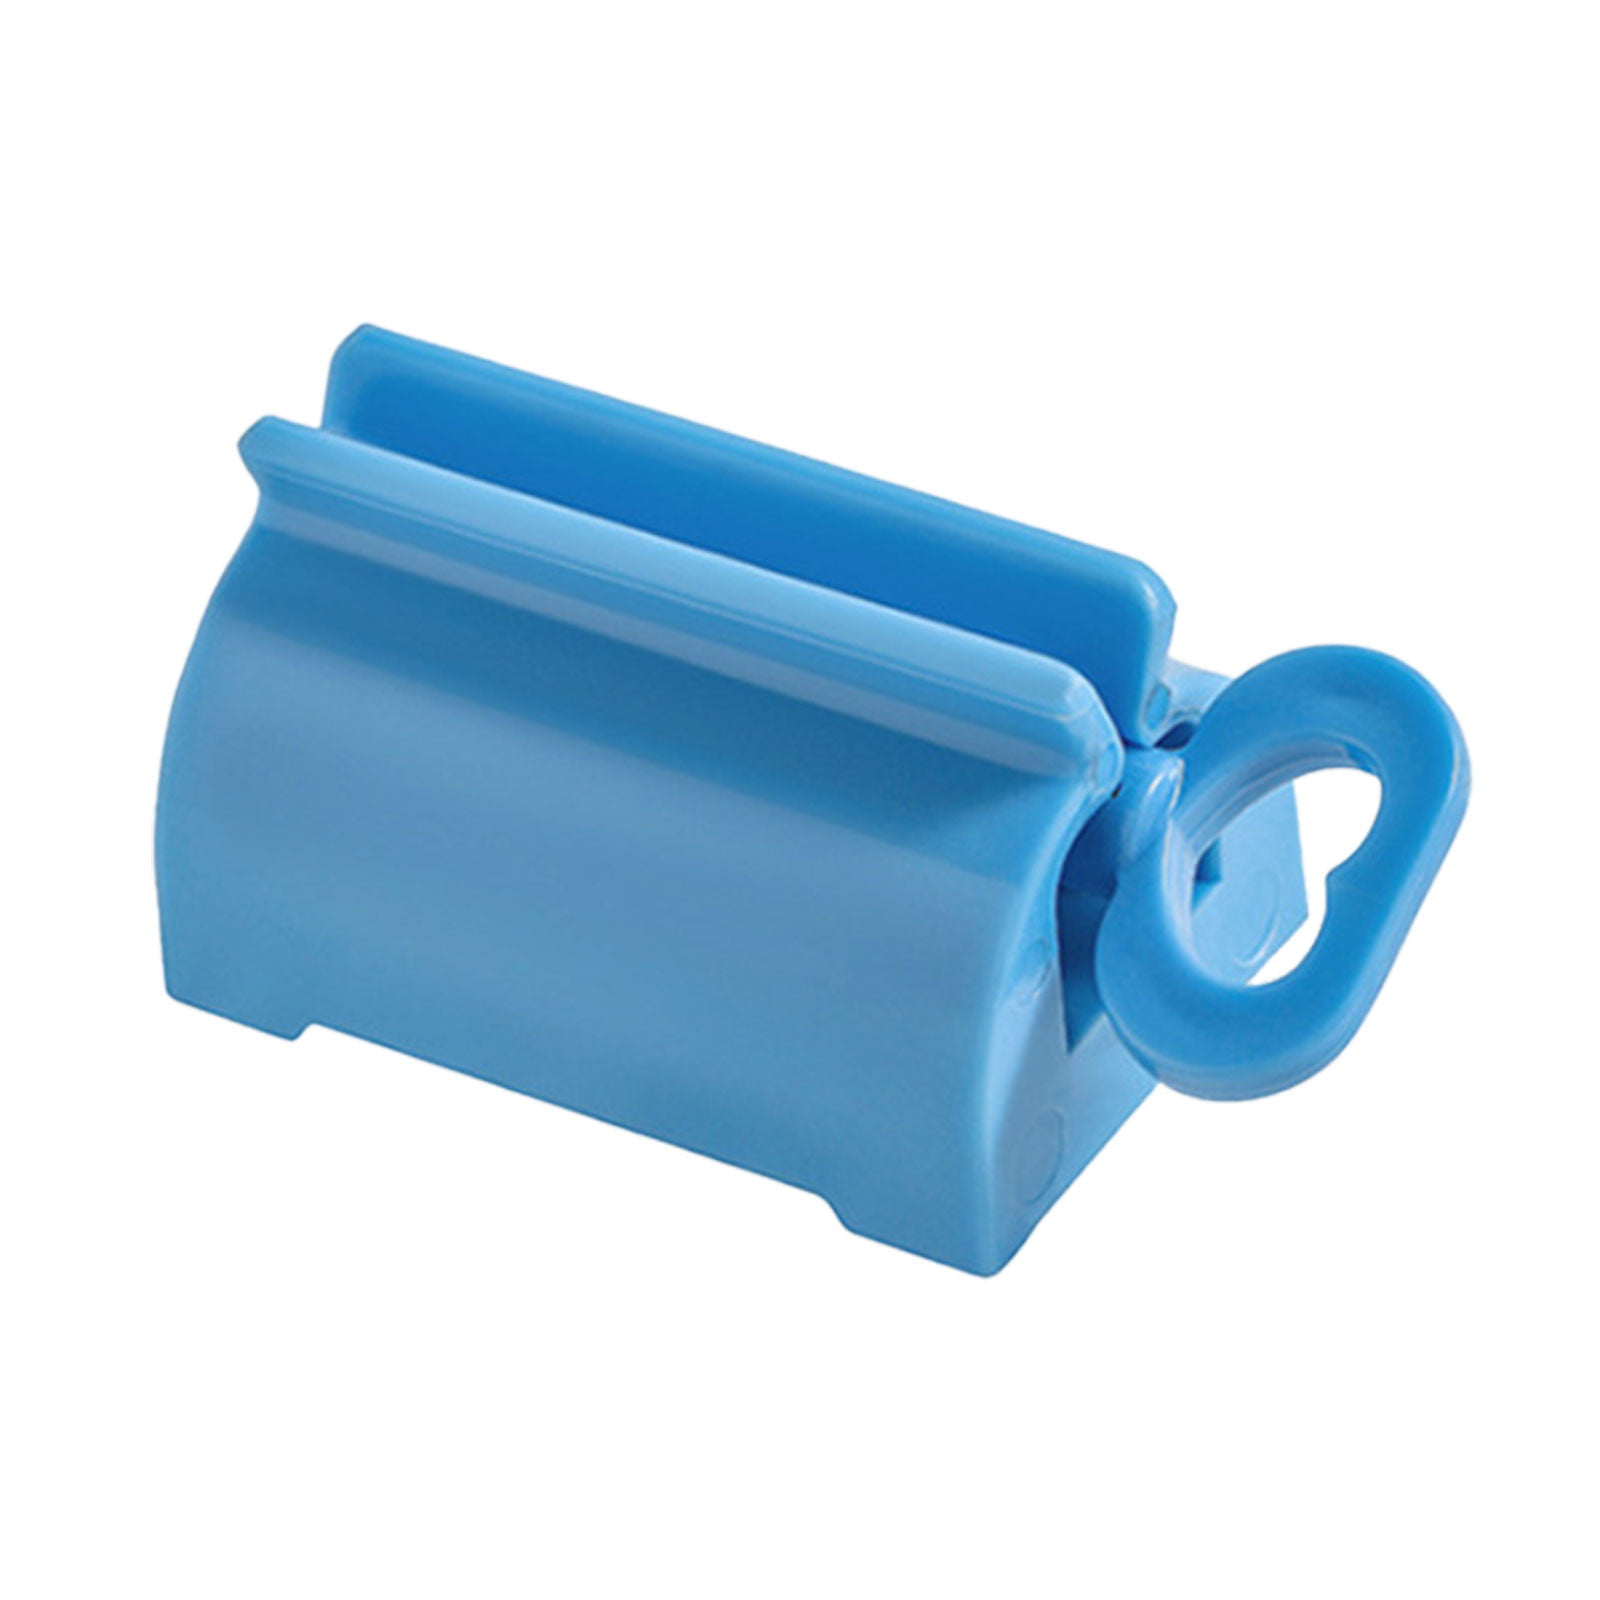 Plastic Toothpaste Tube Squeezer Easy Dispenser Rolling Holder Bathroom Supply~ 